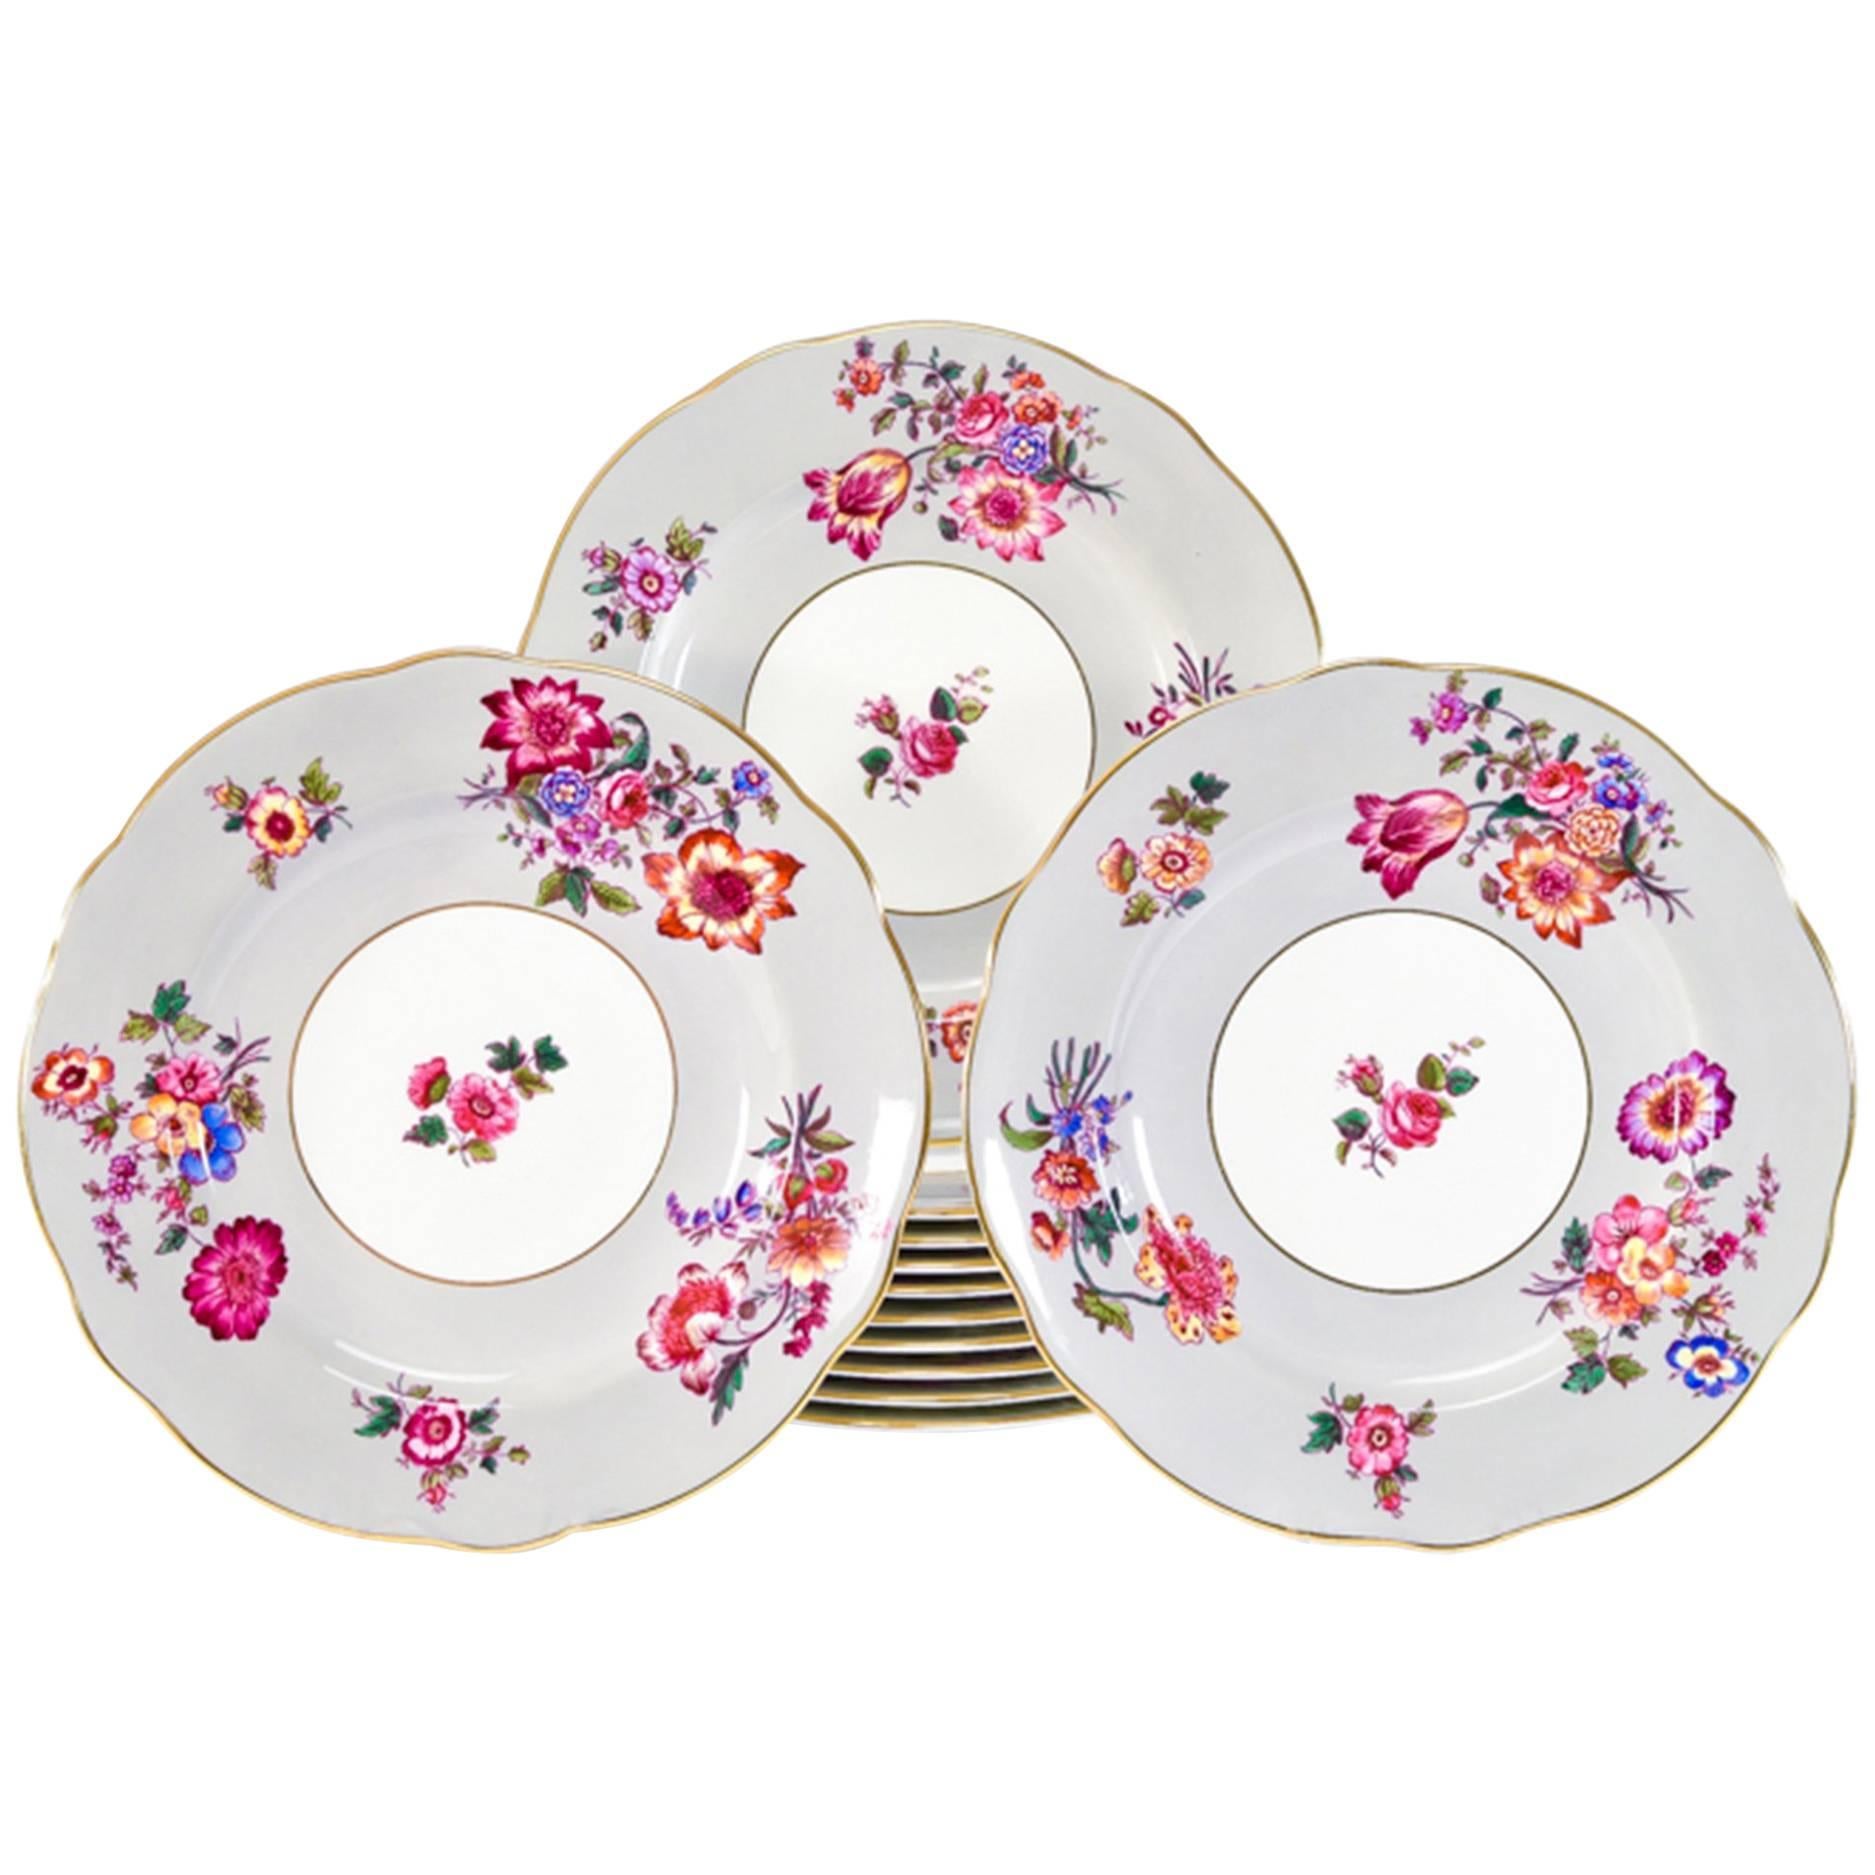 12 Coalport Grey and Polychrome Enamel Floral Shaped Rim Dinner Service Plates